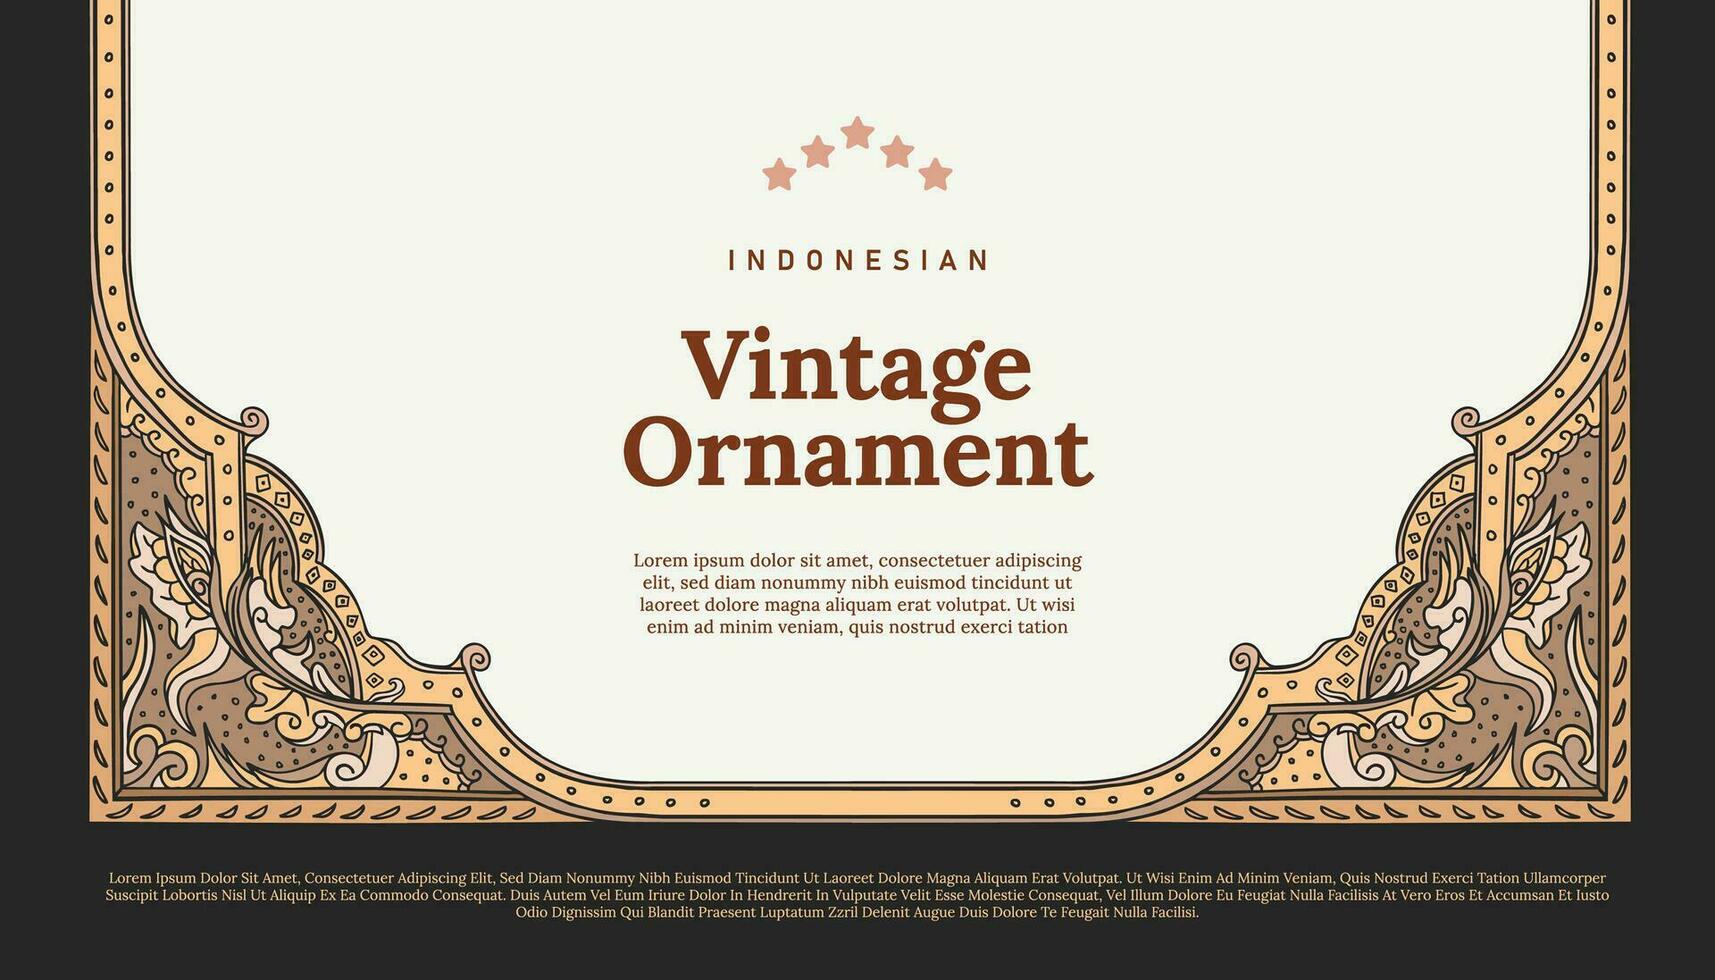 indonesia vintage ornament design layout idea vector